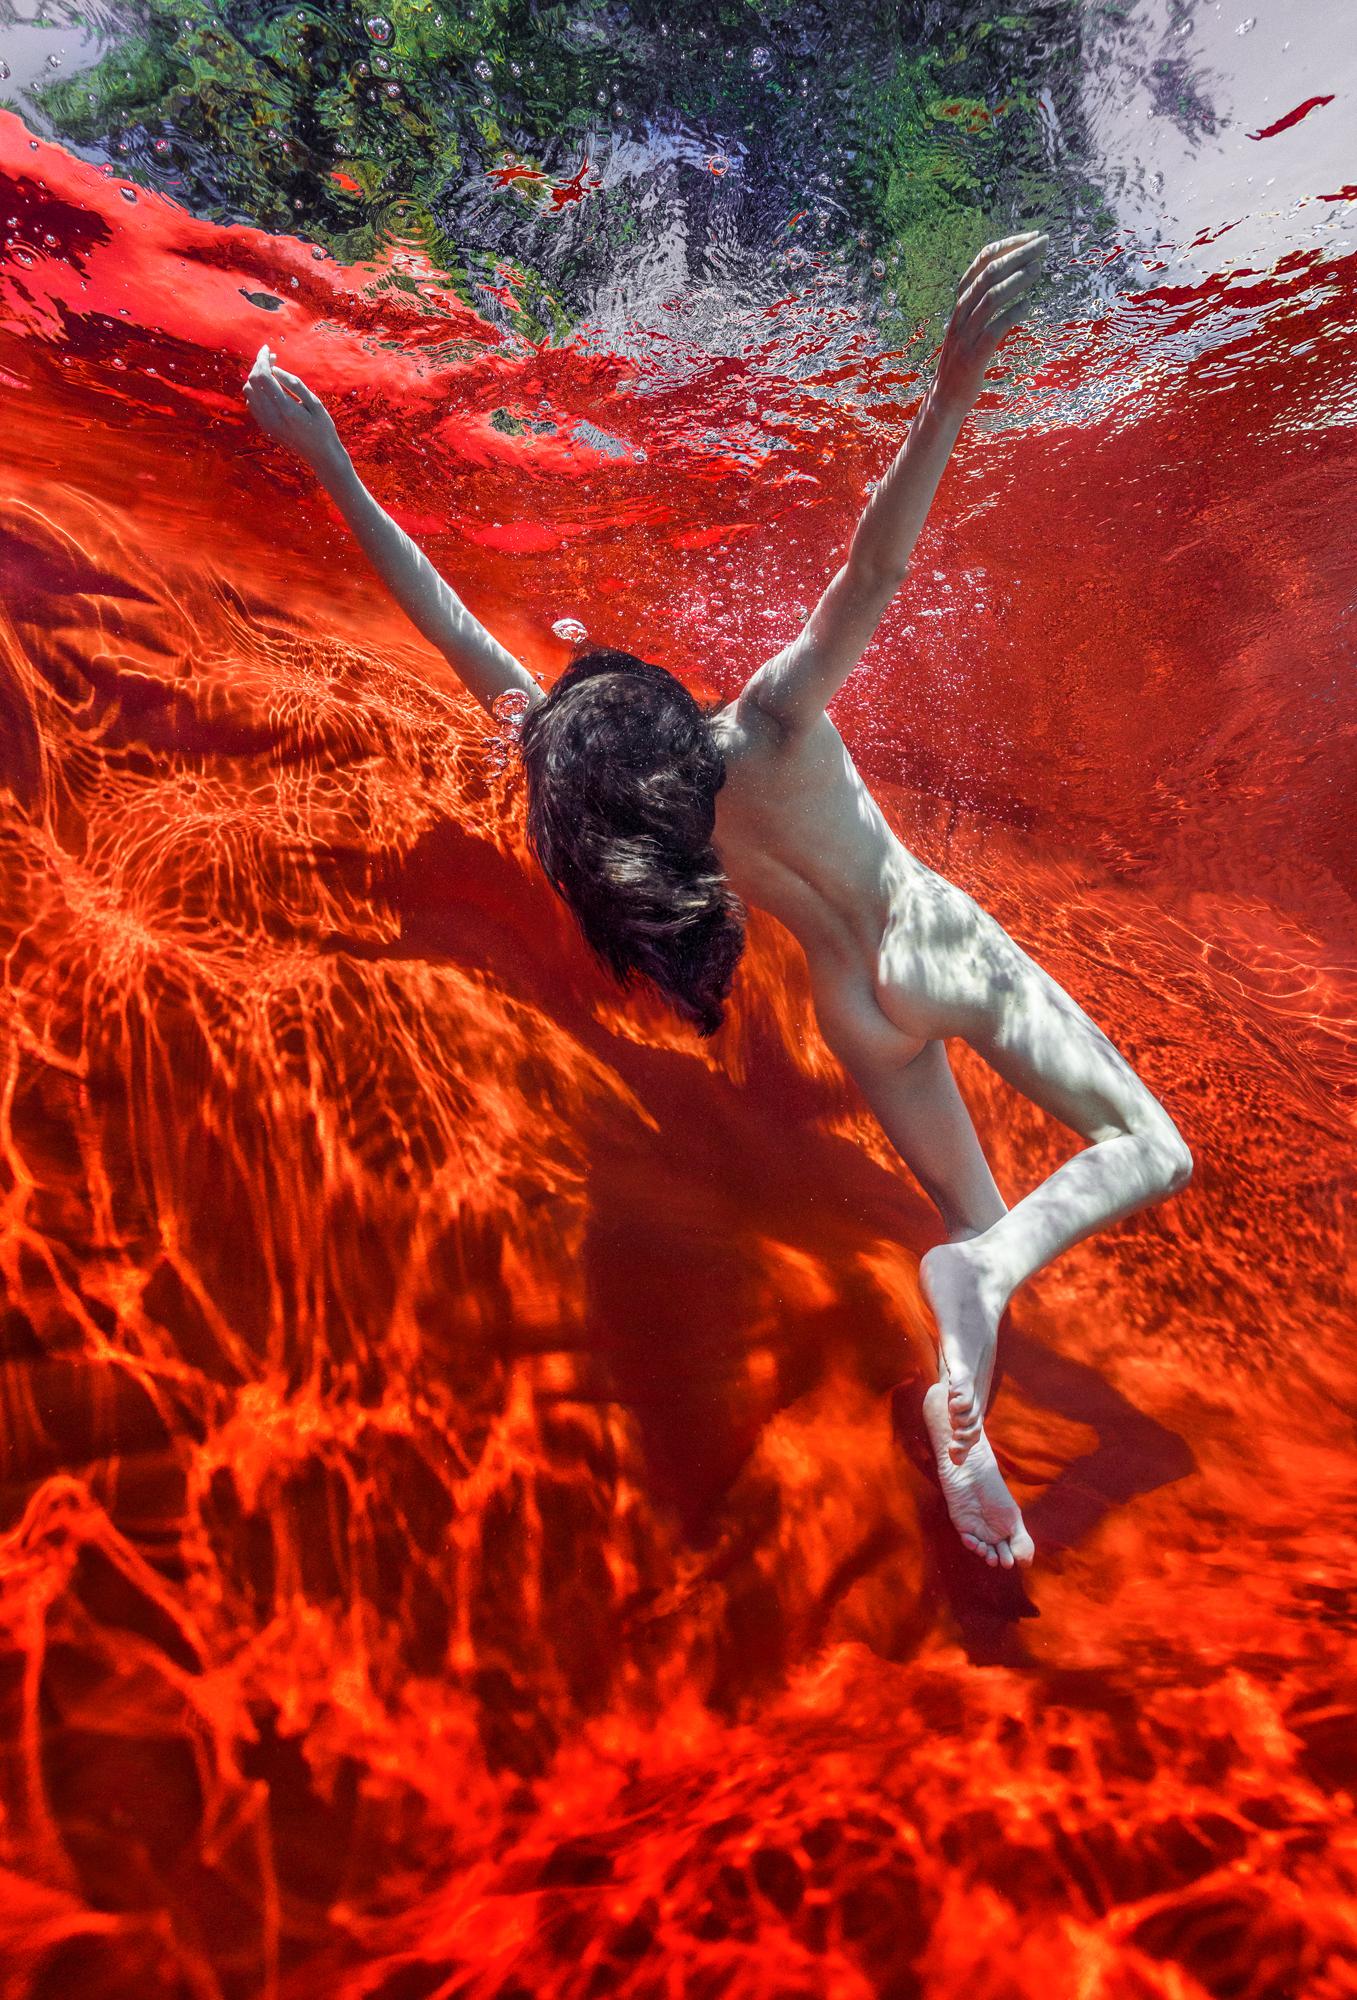 Hot Water - underwater nude photograph - print on aluminum 36" x 24"